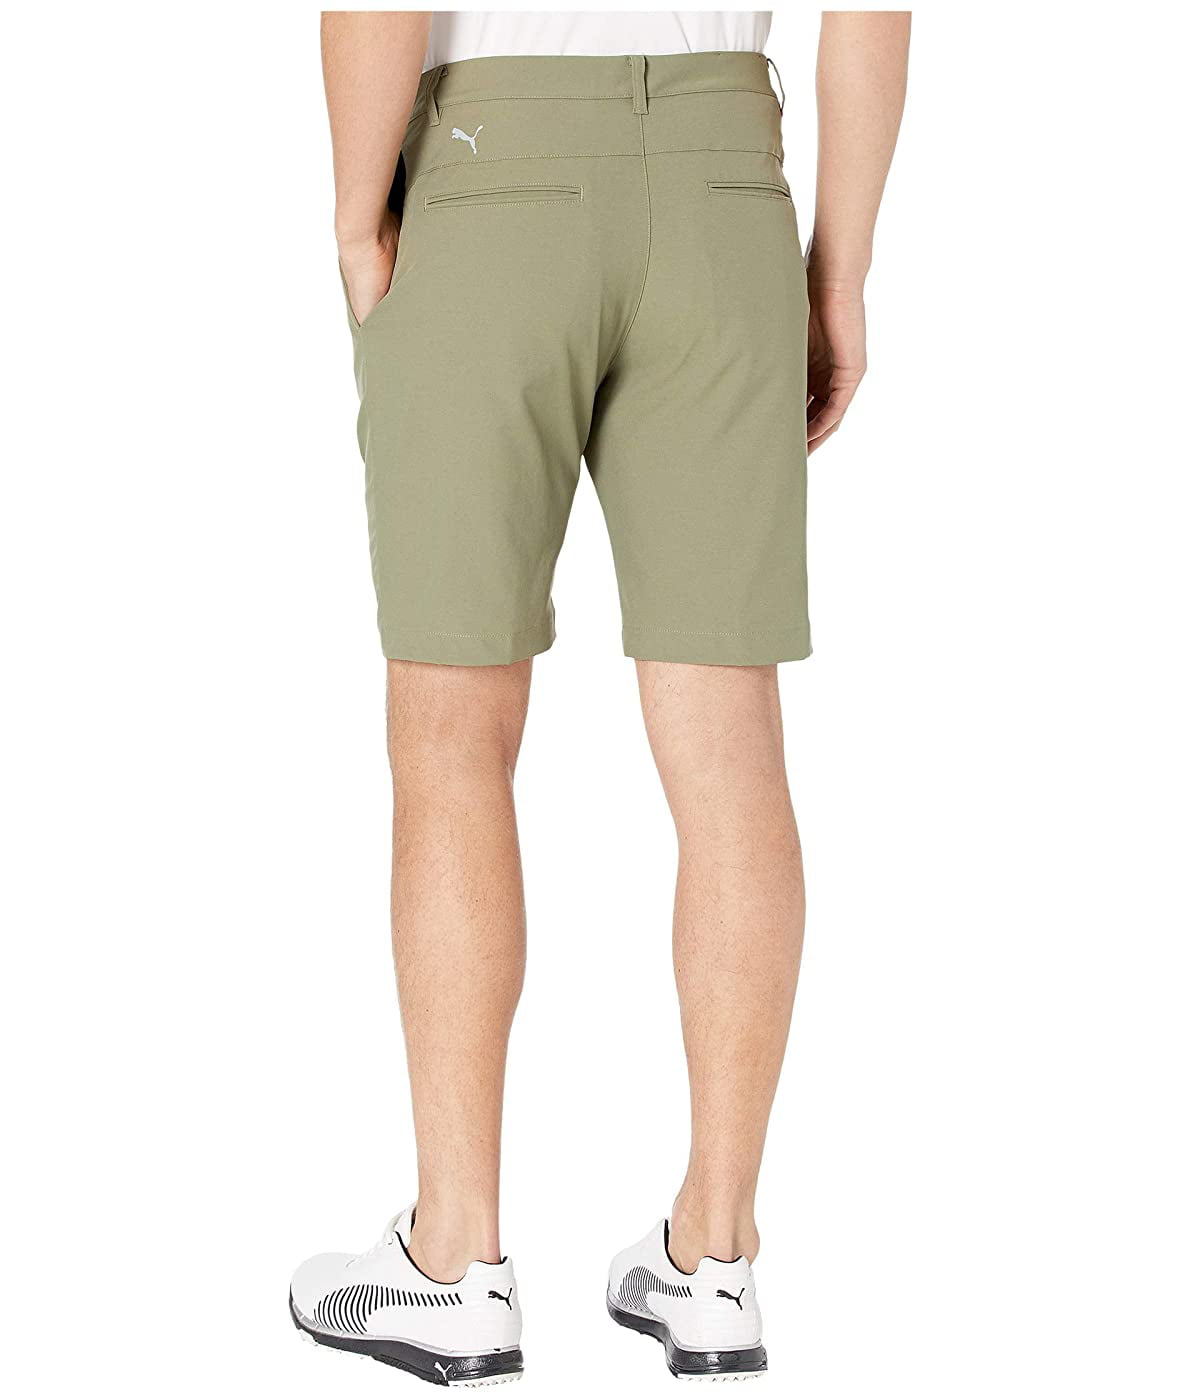 jackpot golf shorts